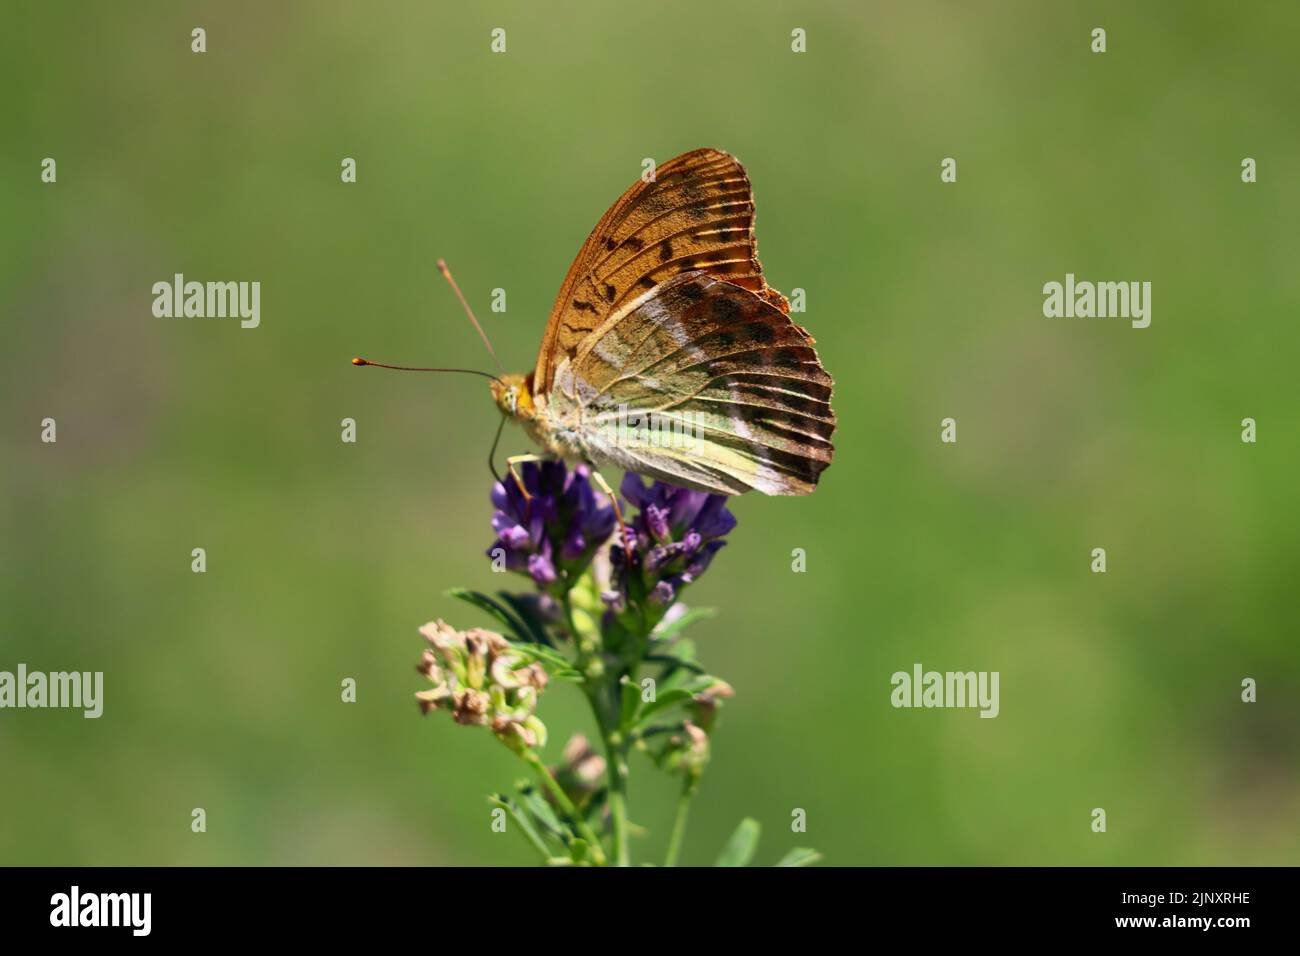 Argento-lavato fritillary butterfly Foto Stock